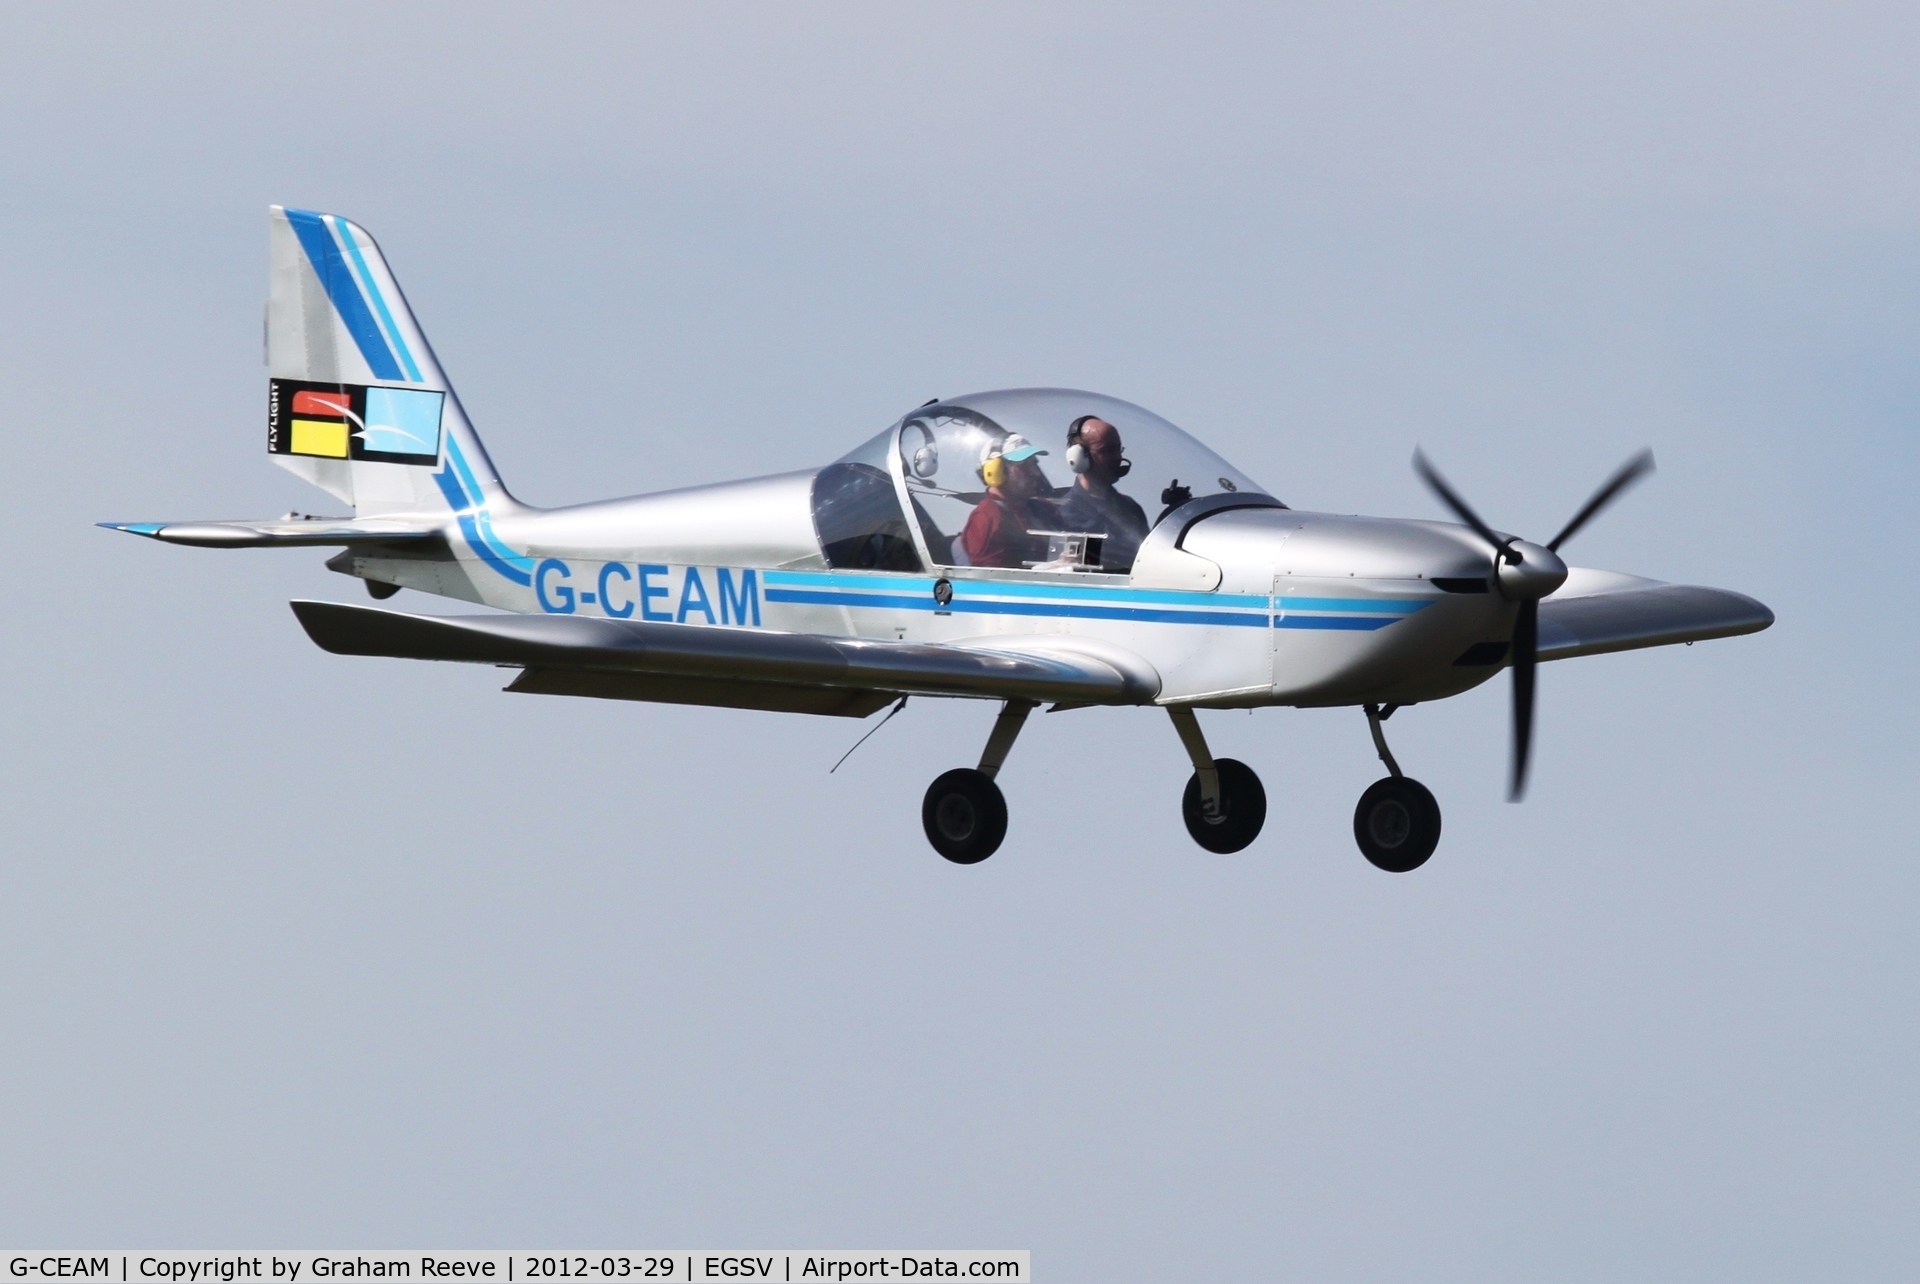 G-CEAM, 2006 Cosmik EV-97 TeamEurostar UK C/N 2729, About to land.